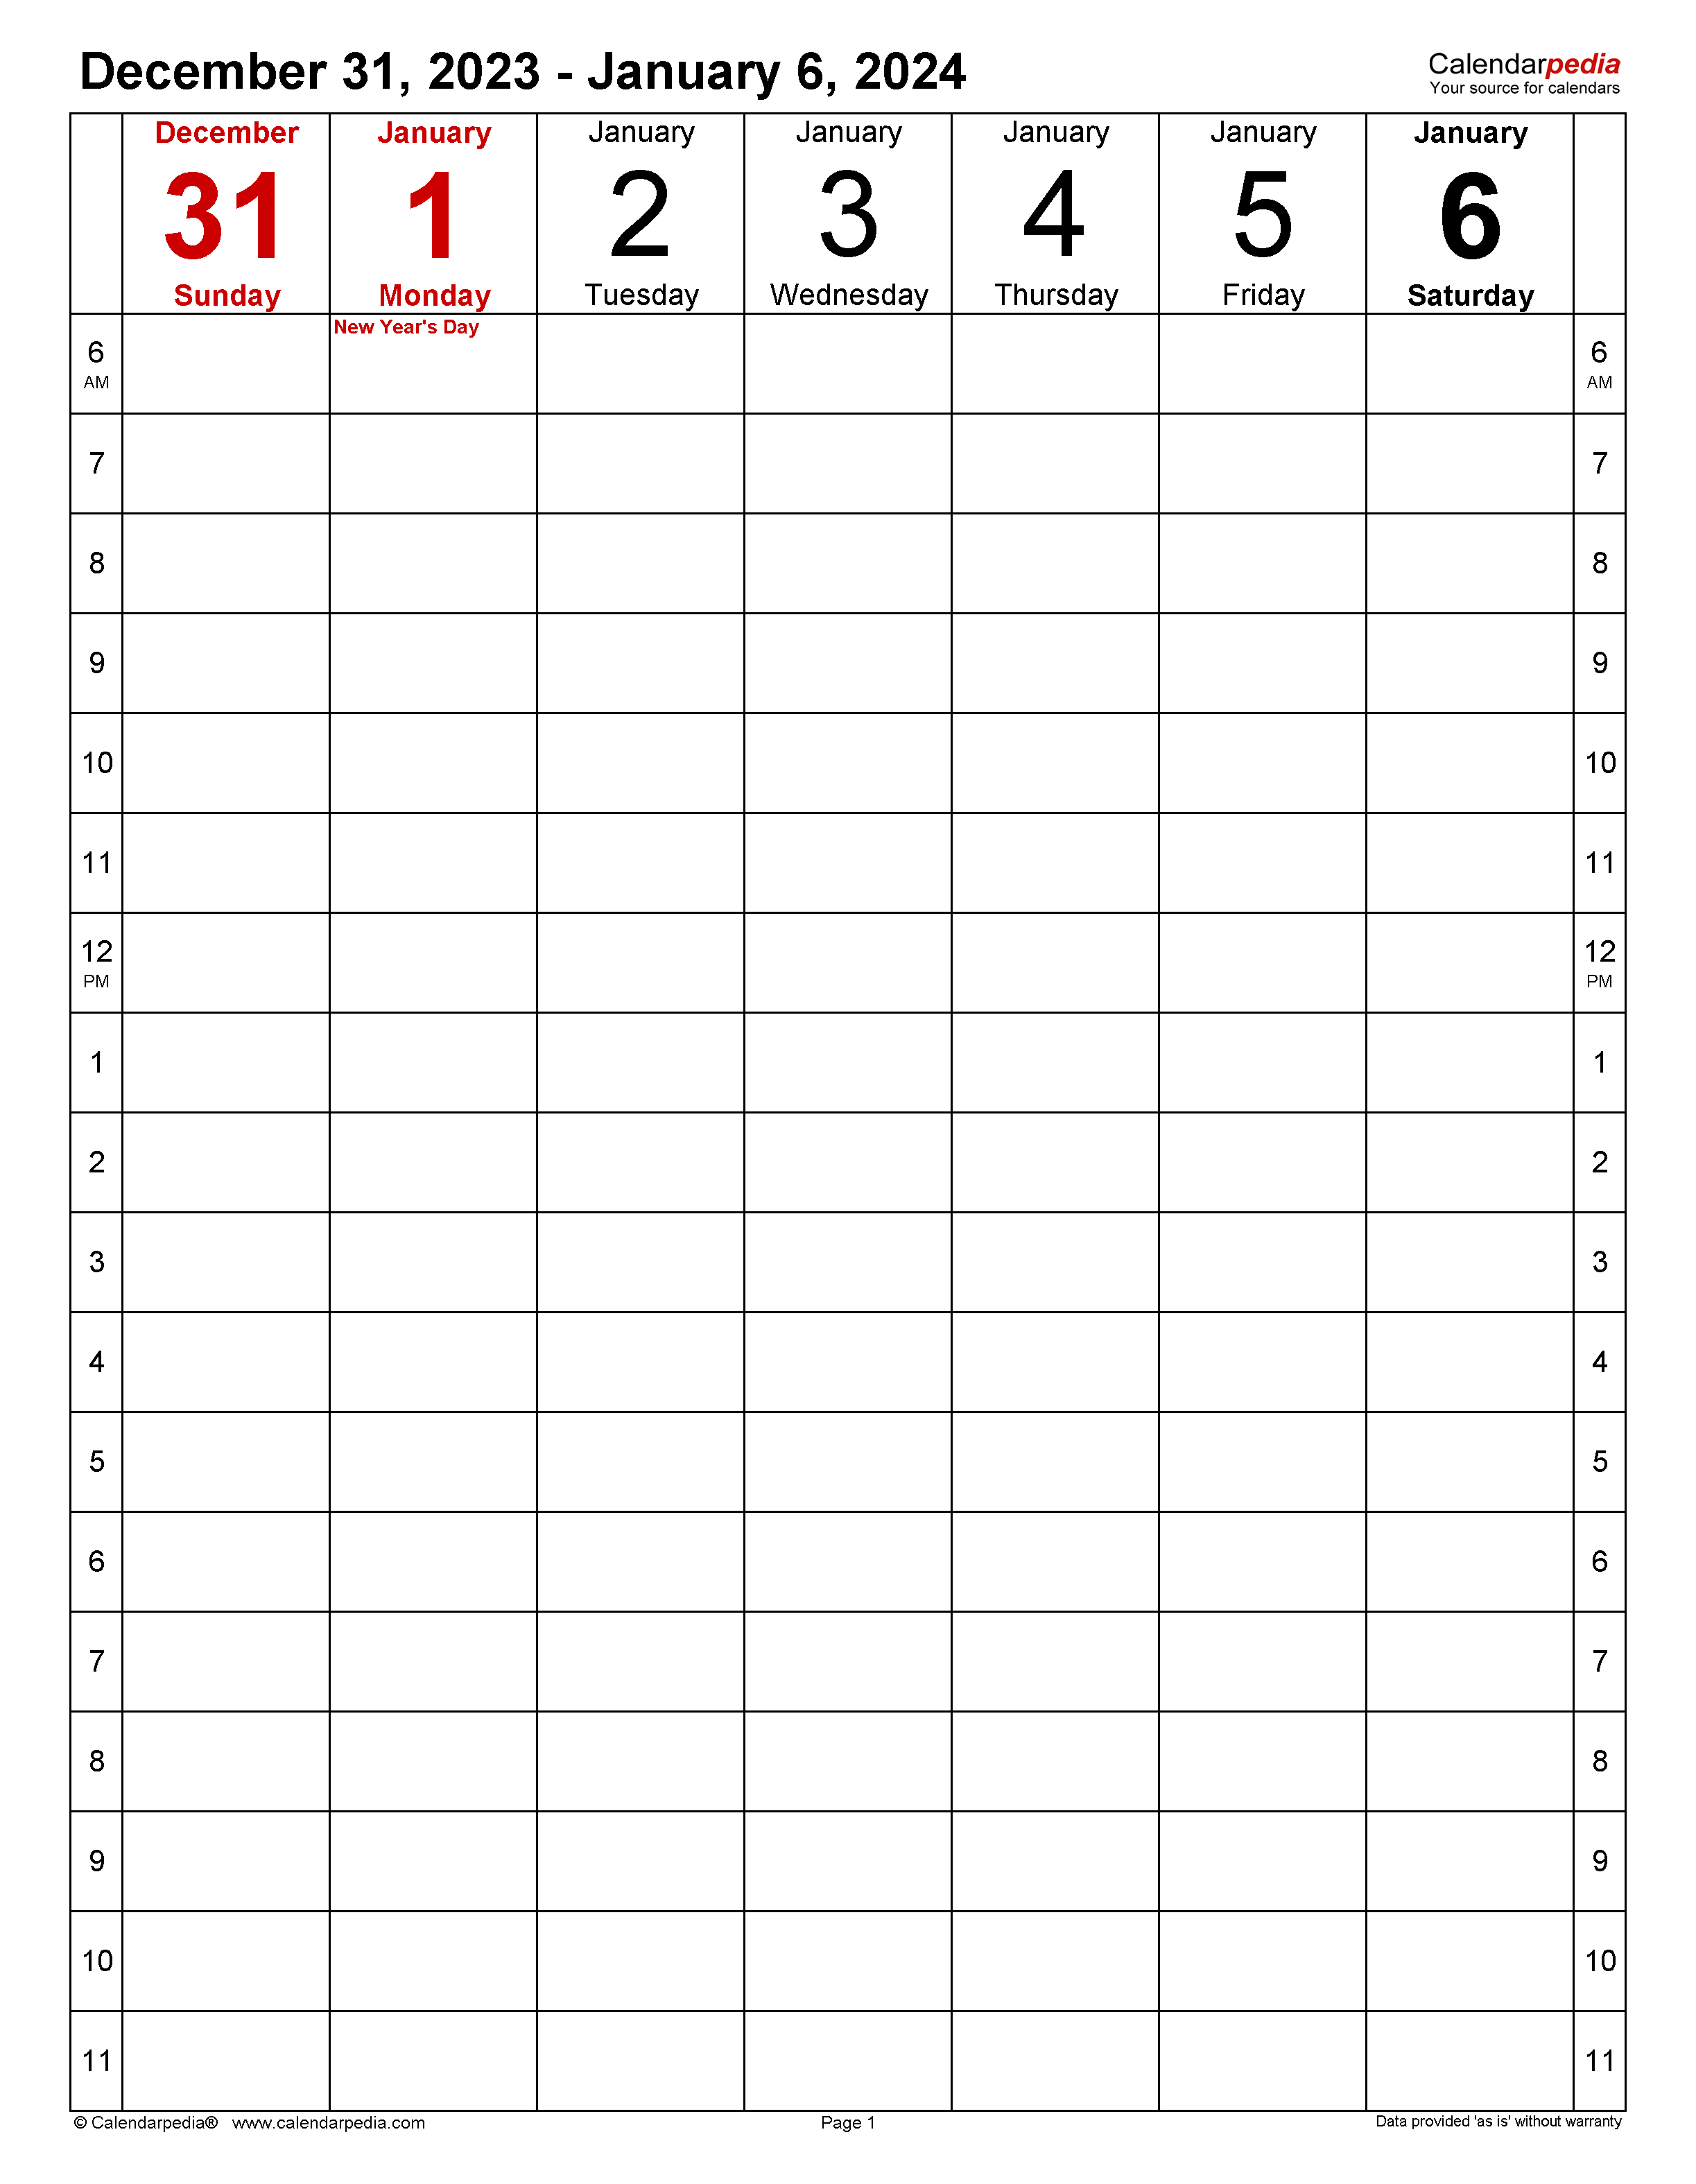 Weekly Calendars 2024 For Pdf - 12 Free Printable Templates for Printable Daily Calendar 2024